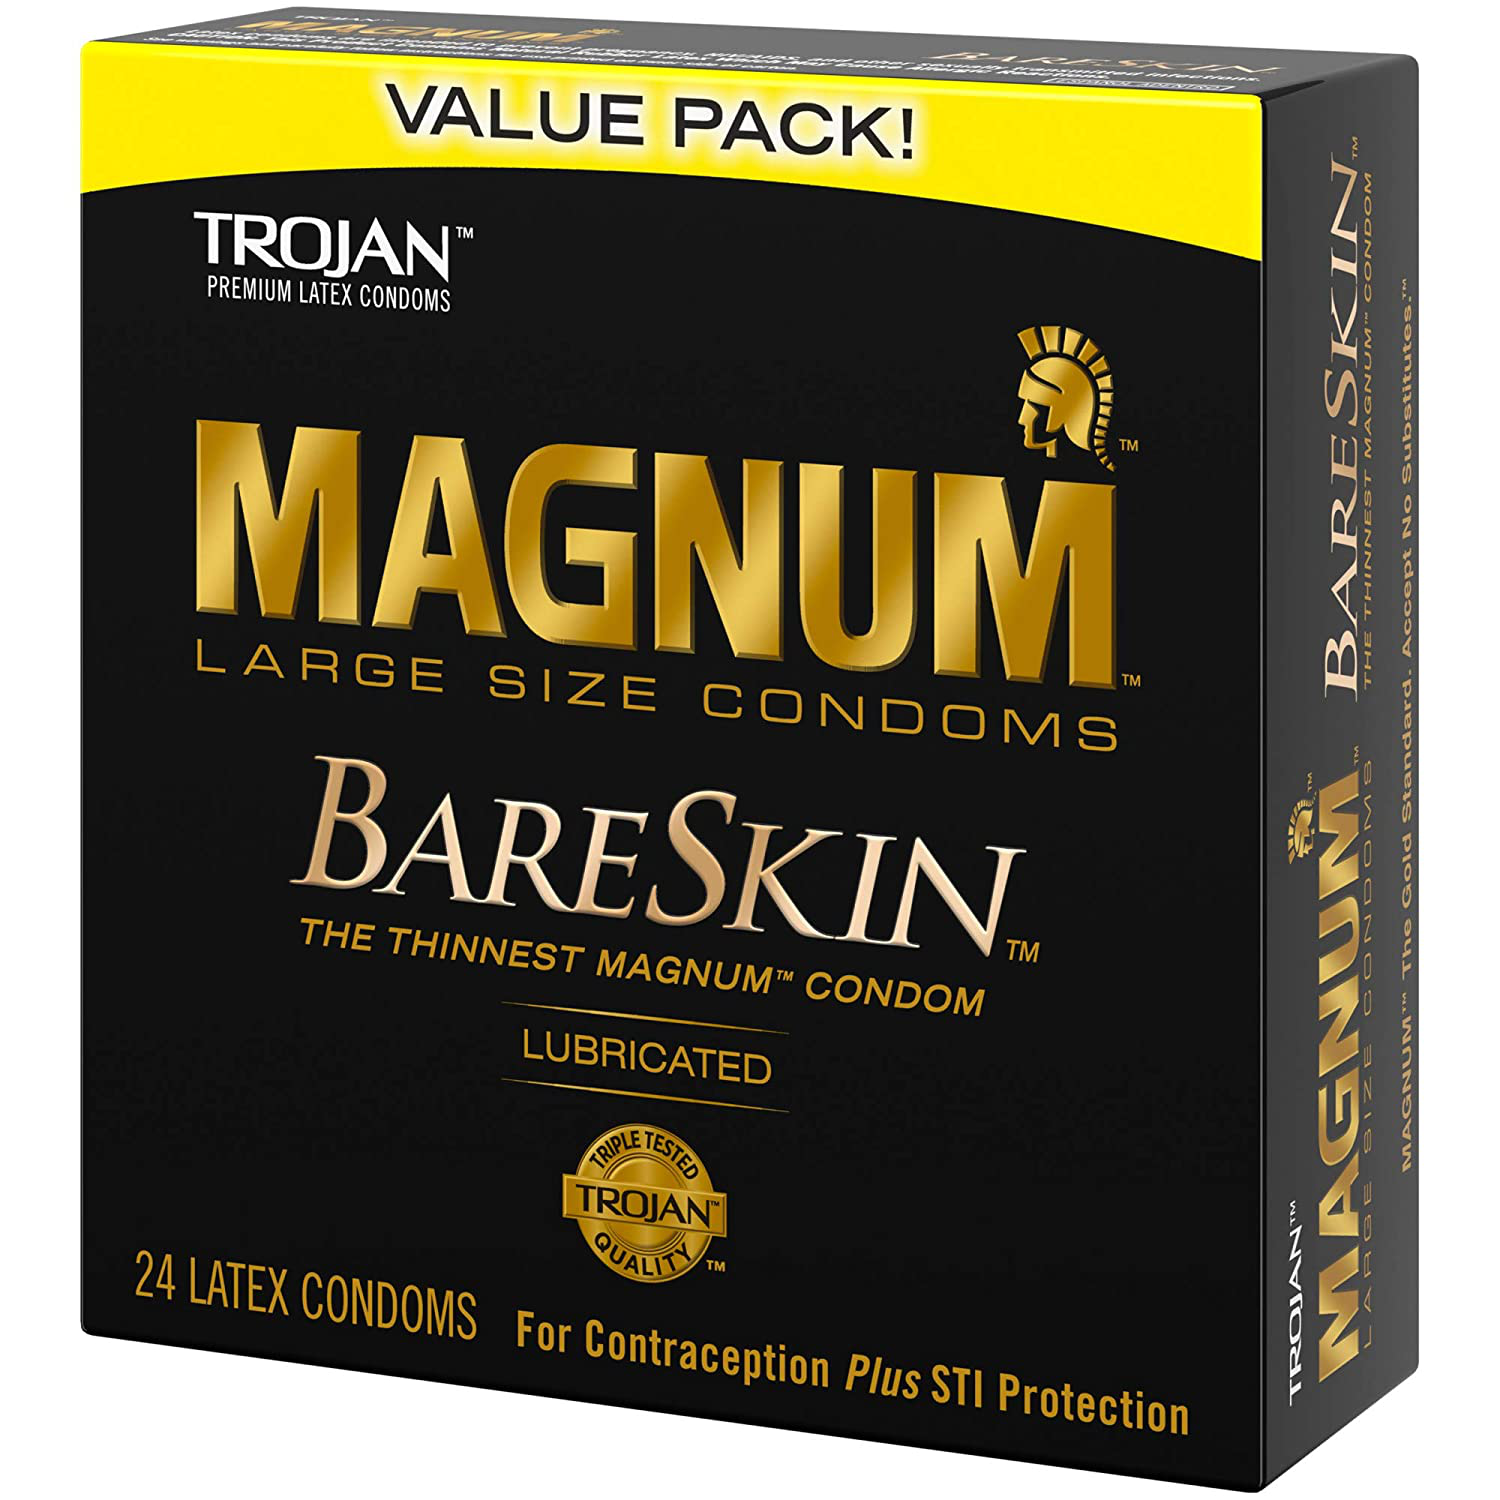 TROJAN MAGNUM BARESKIN Large Size Condoms, 24 Count